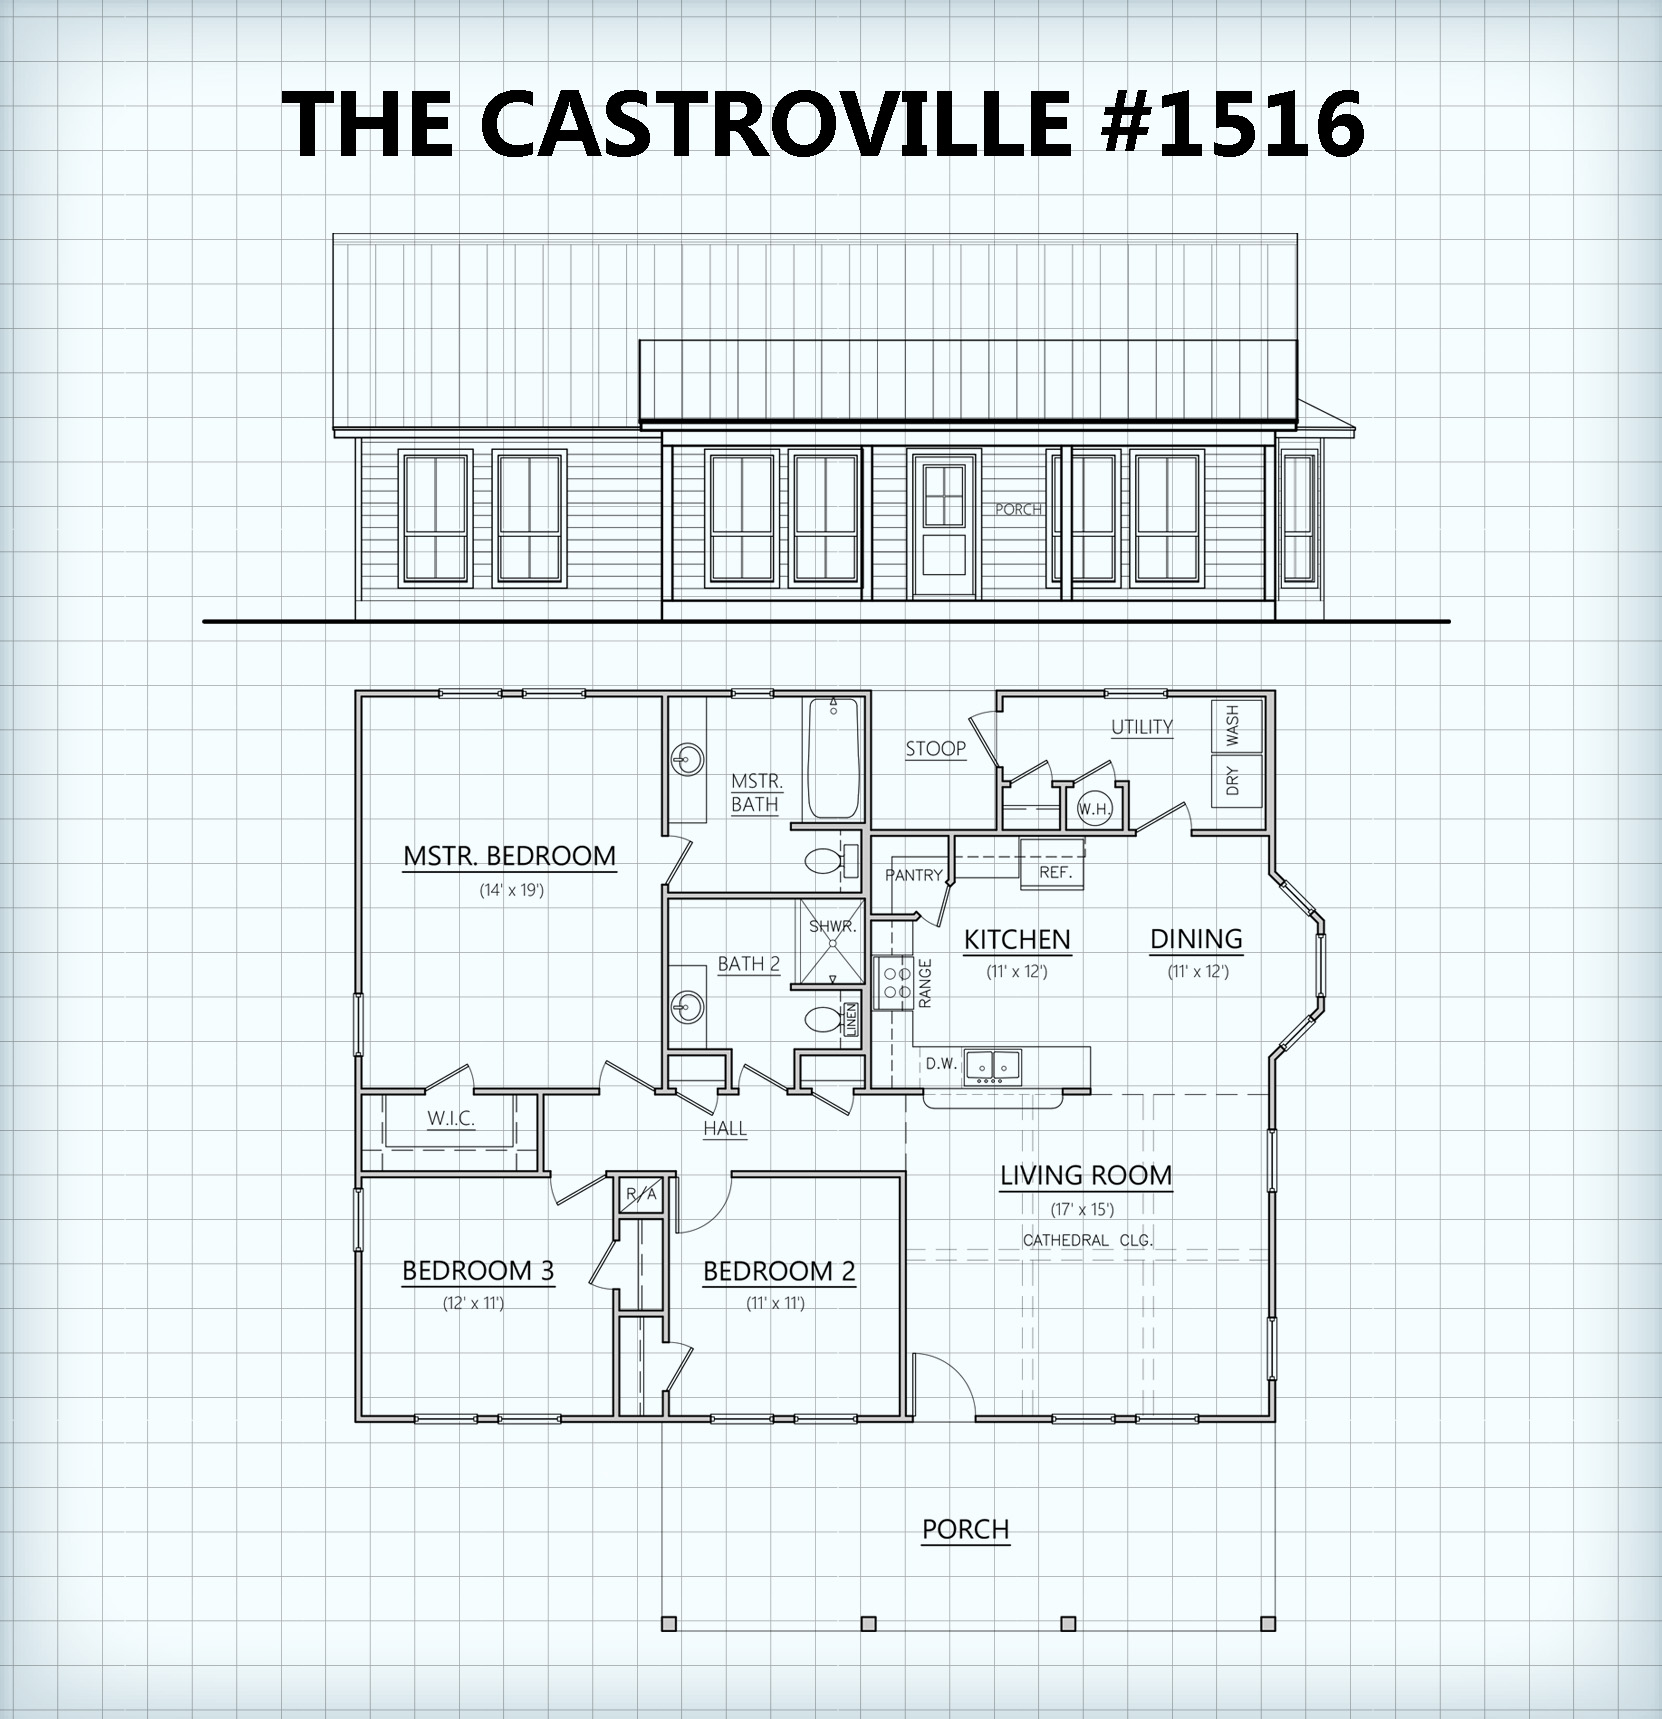 The Castroville #1516